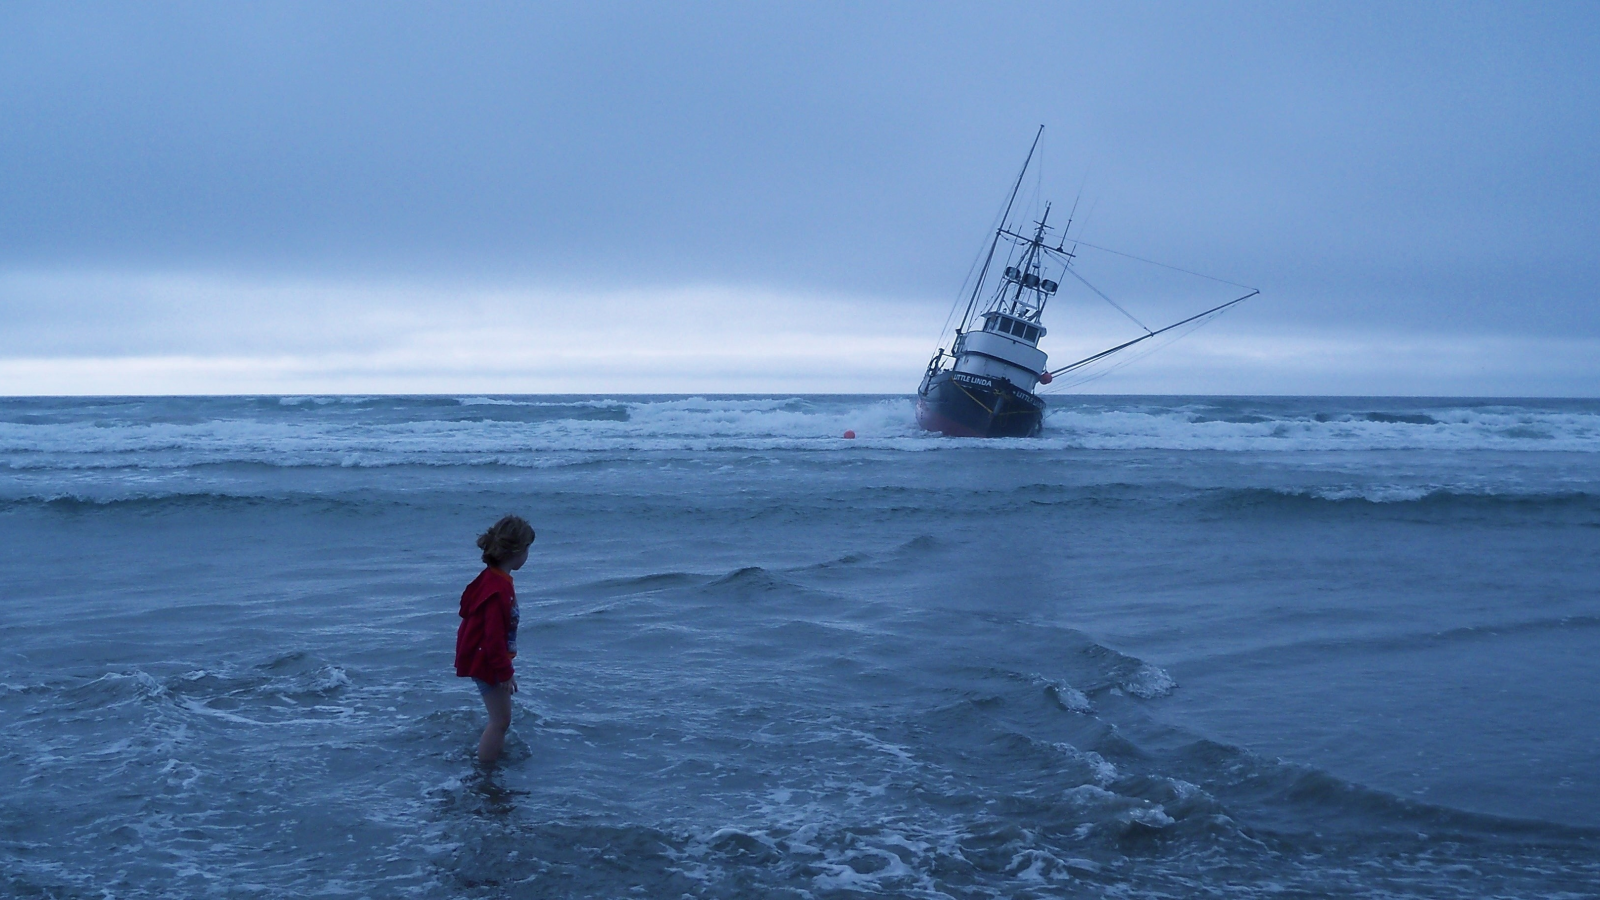 корабль, ребенок, море, одиночество